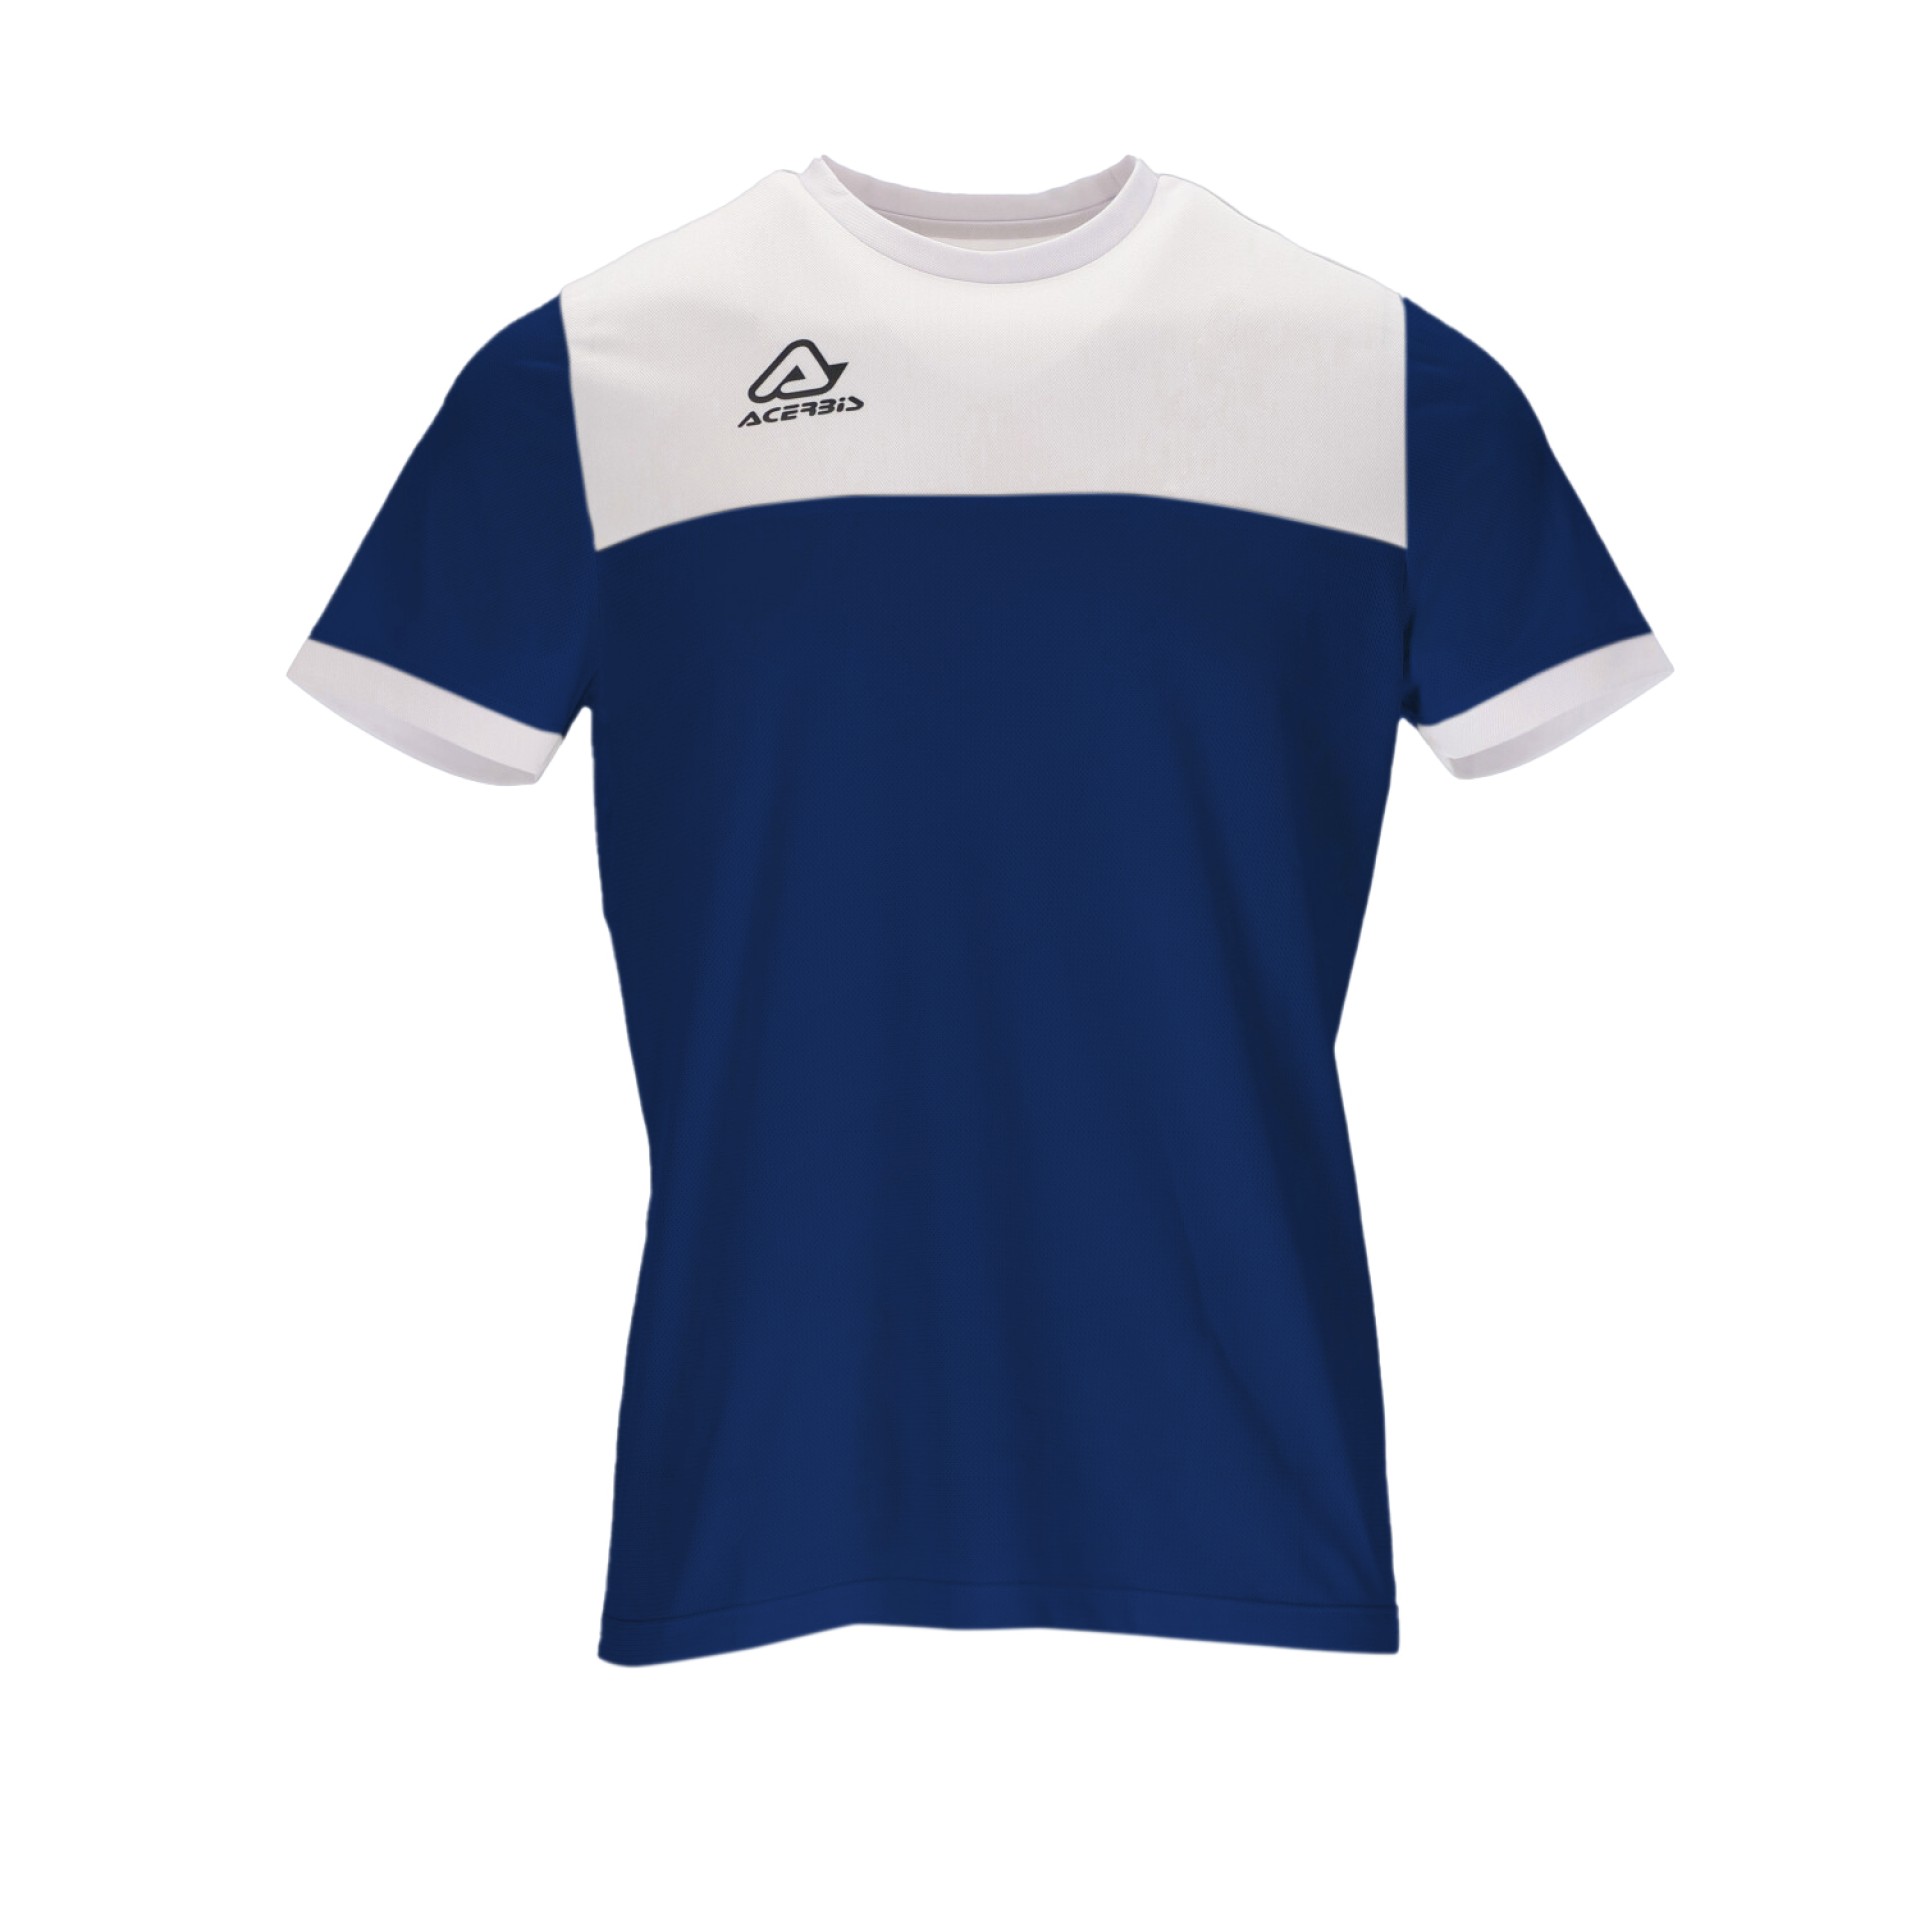 Acerbis Harpaston Football Shirt Navy White